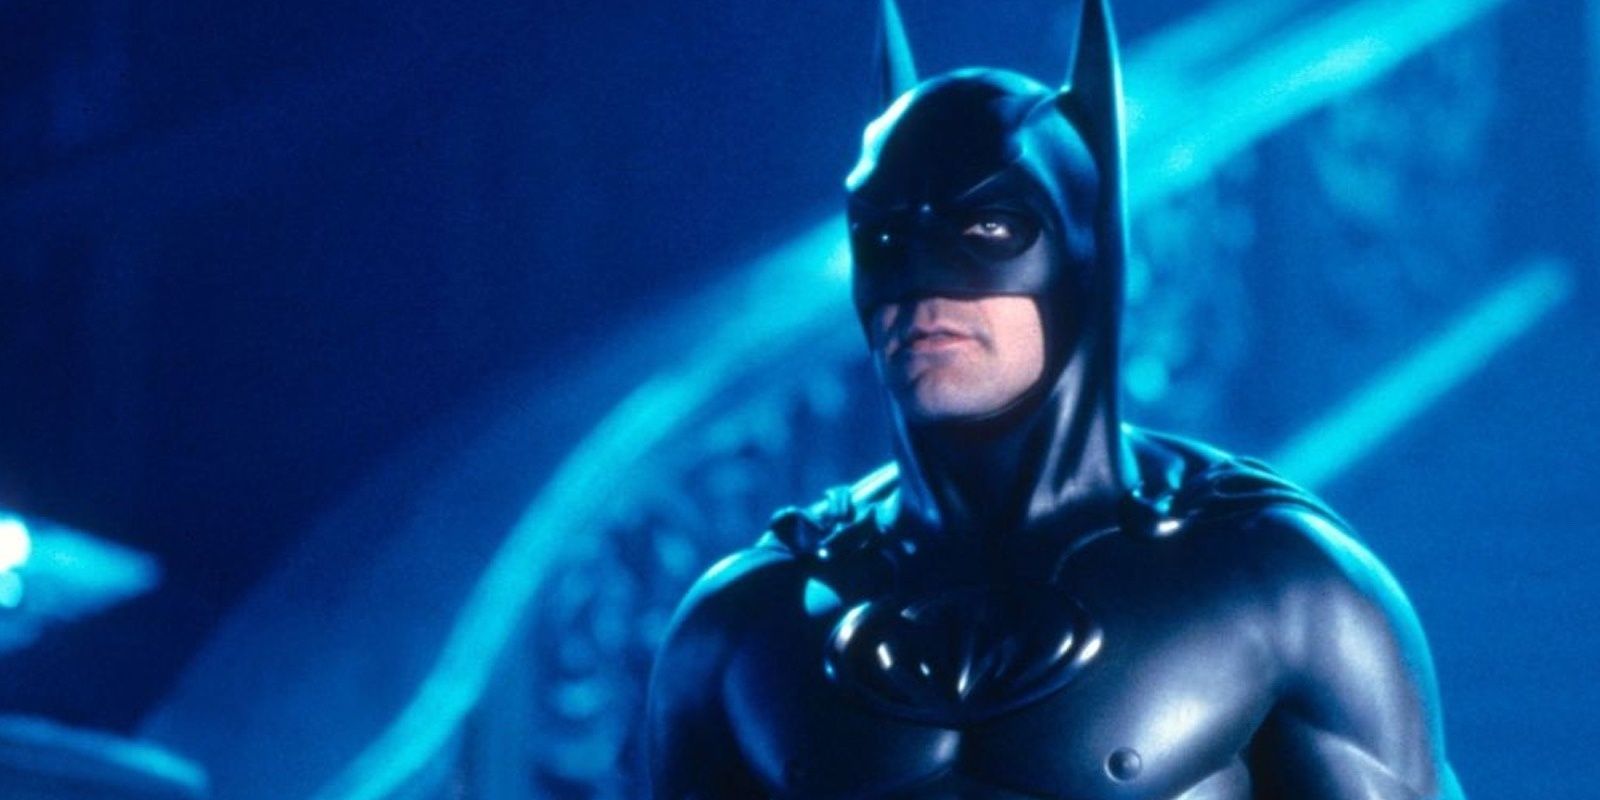 George Clooney as Batman in the suit in Batman & Robin